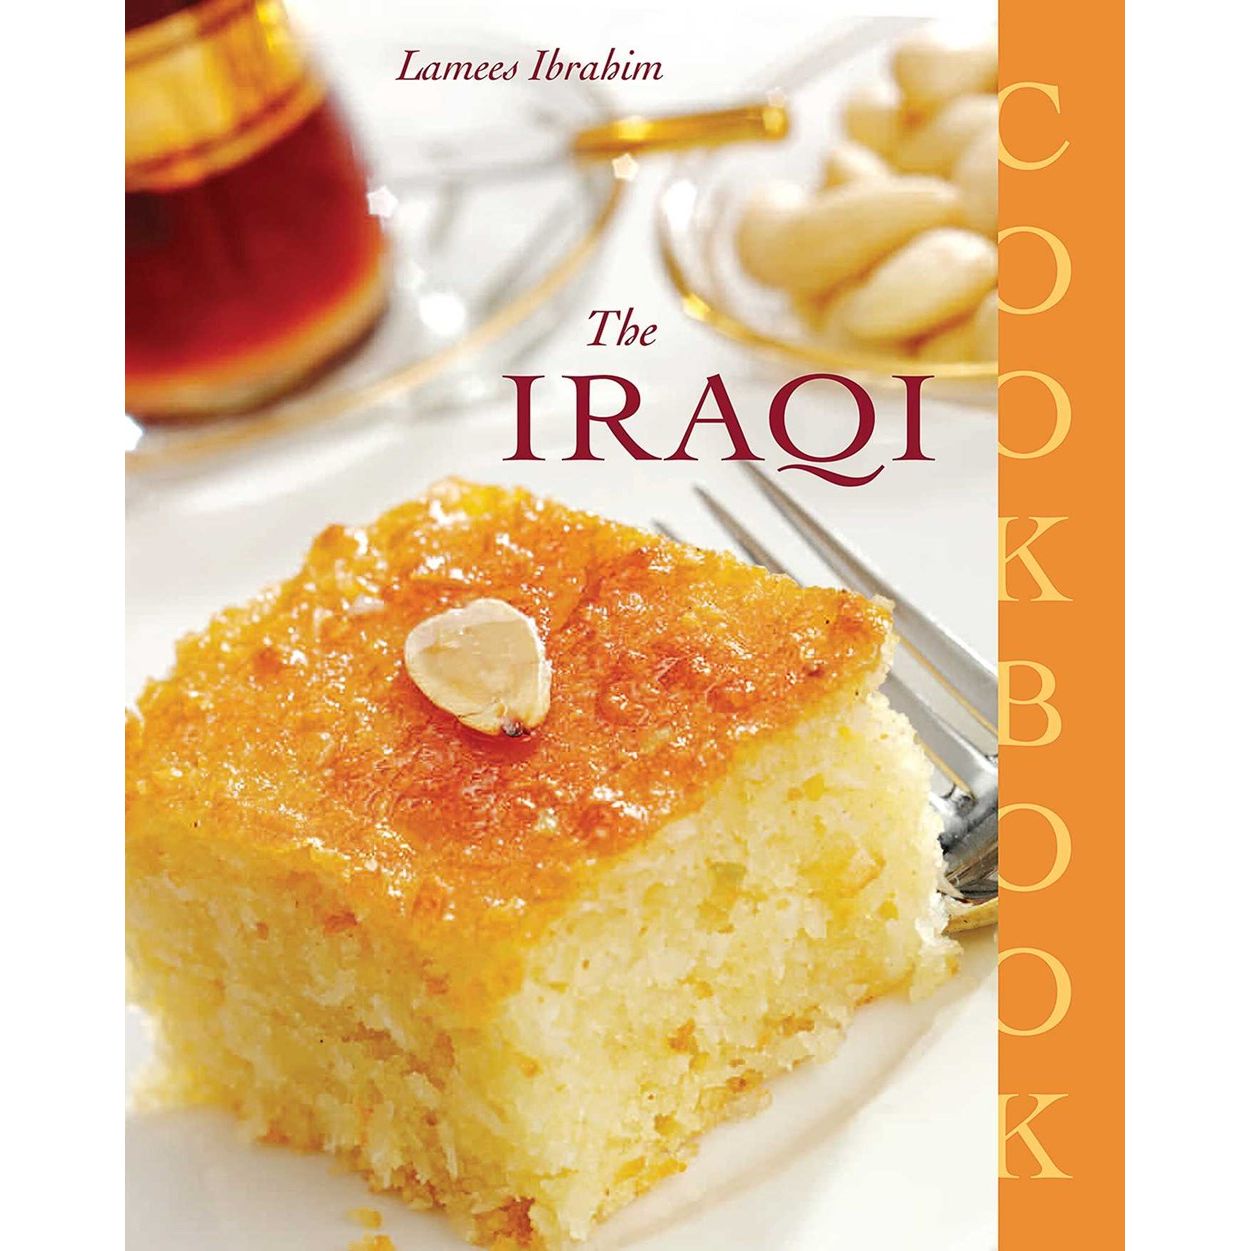 The Iraqi Cookbook (Lamees Ibrahim)